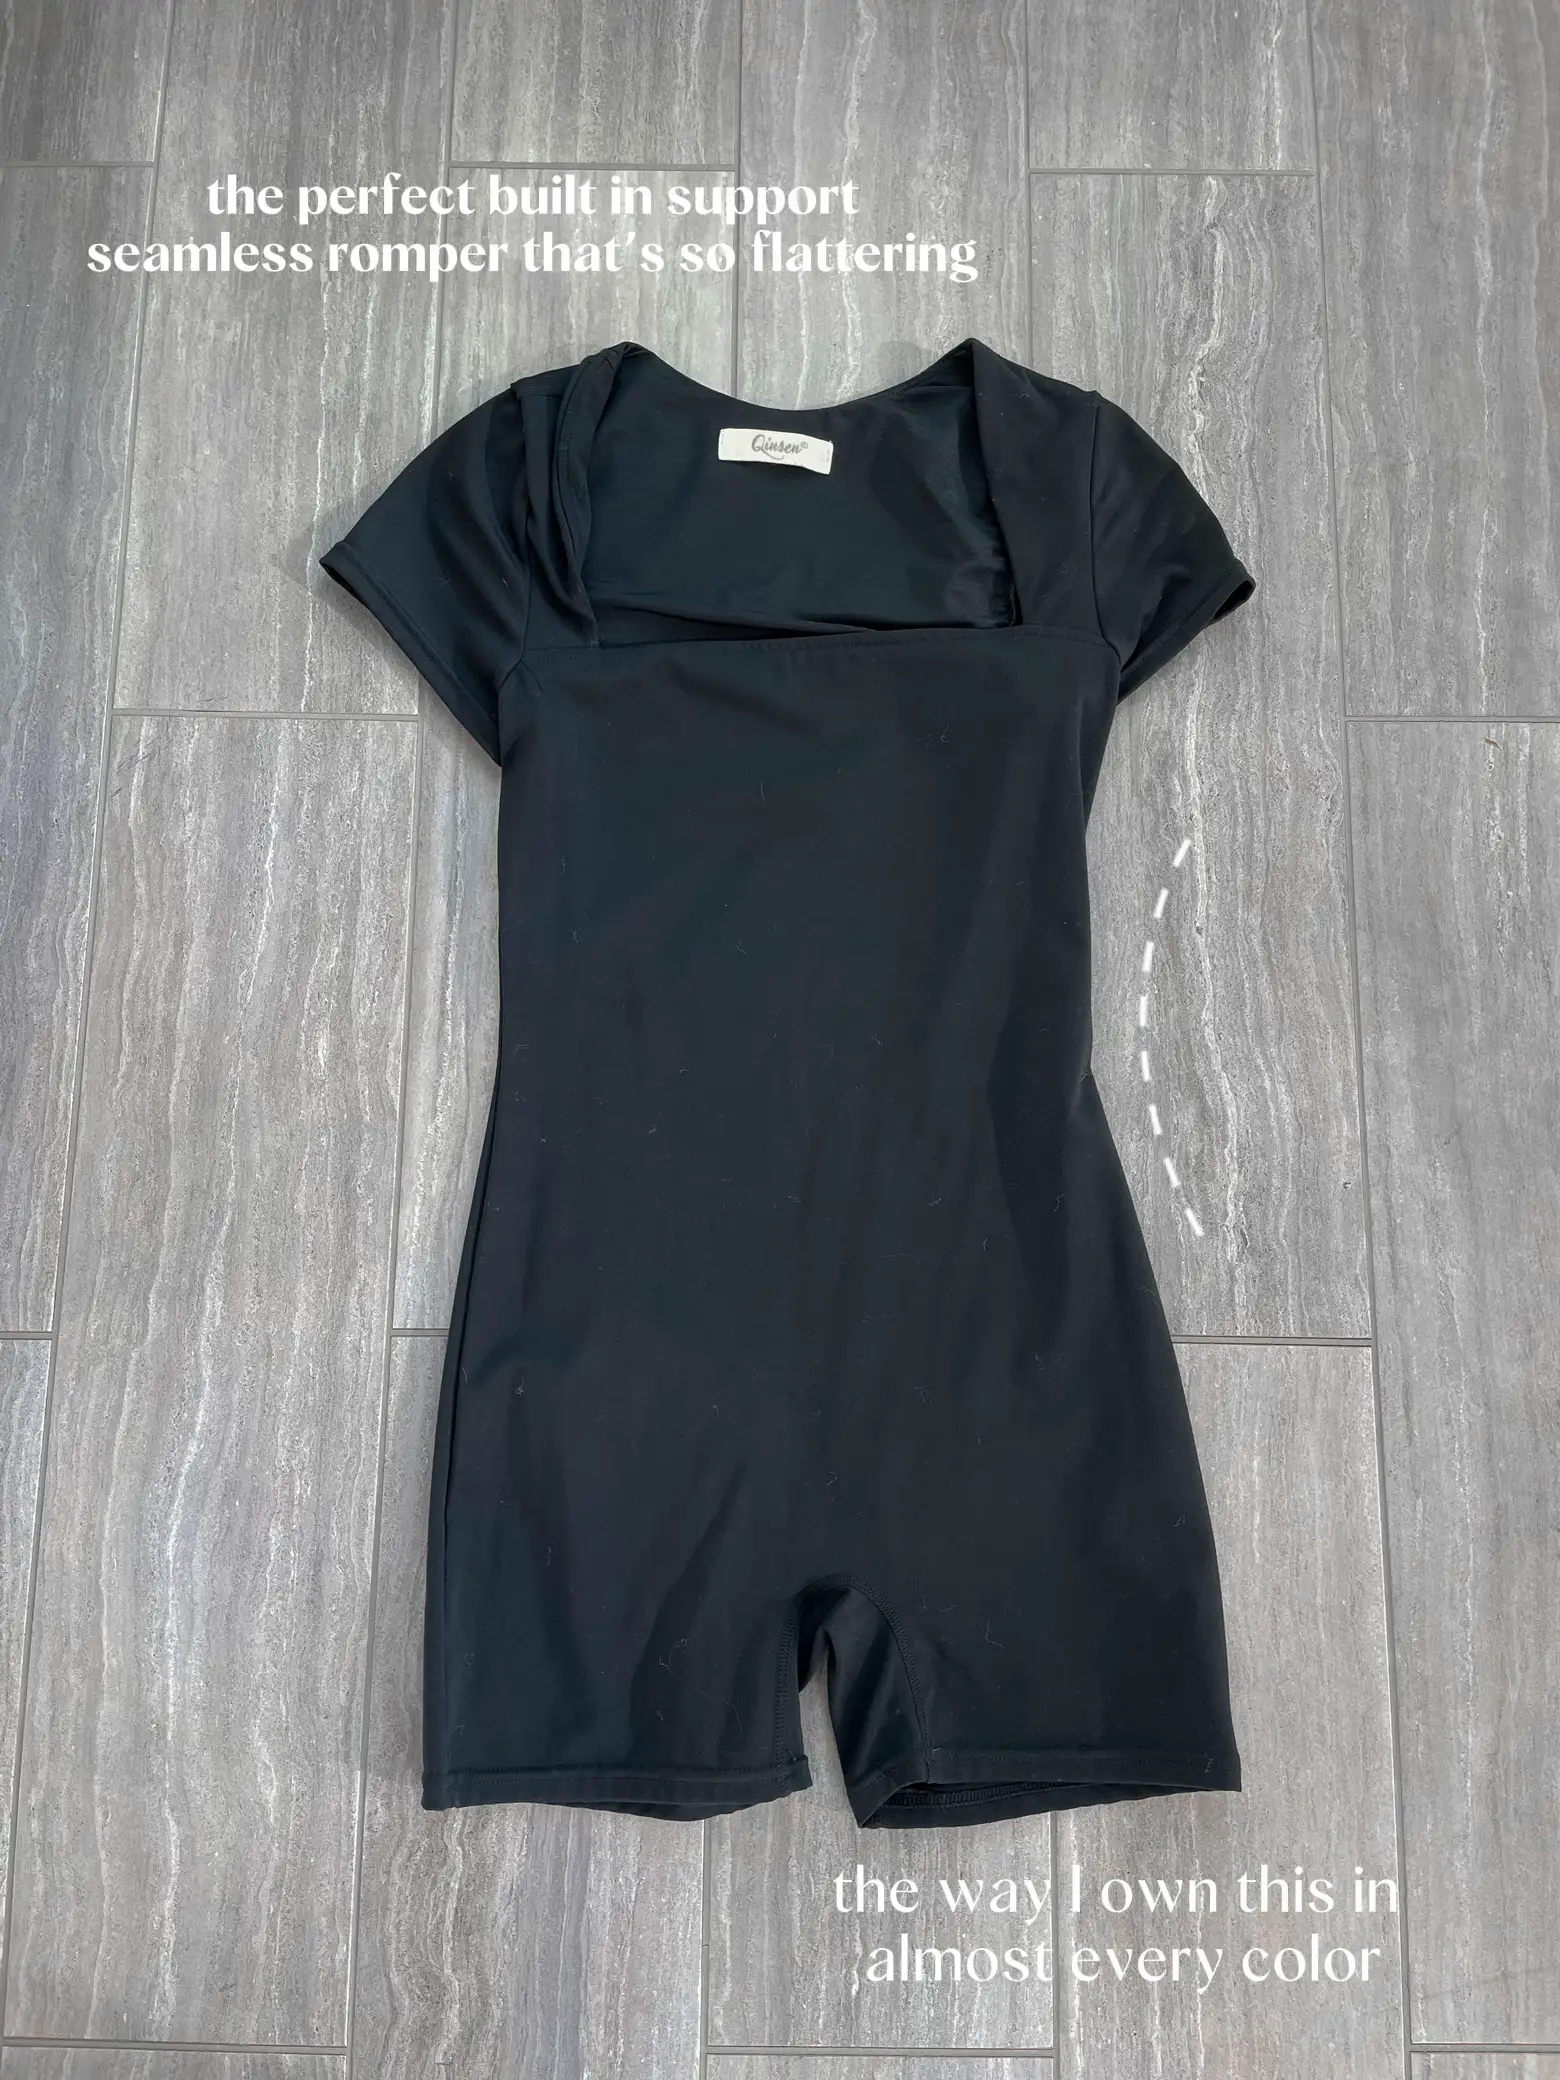 VSVO Unisex Spandex Unitard Bodysuit with Penis Sheath (Kids Small, Black)  : : Clothing, Shoes & Accessories